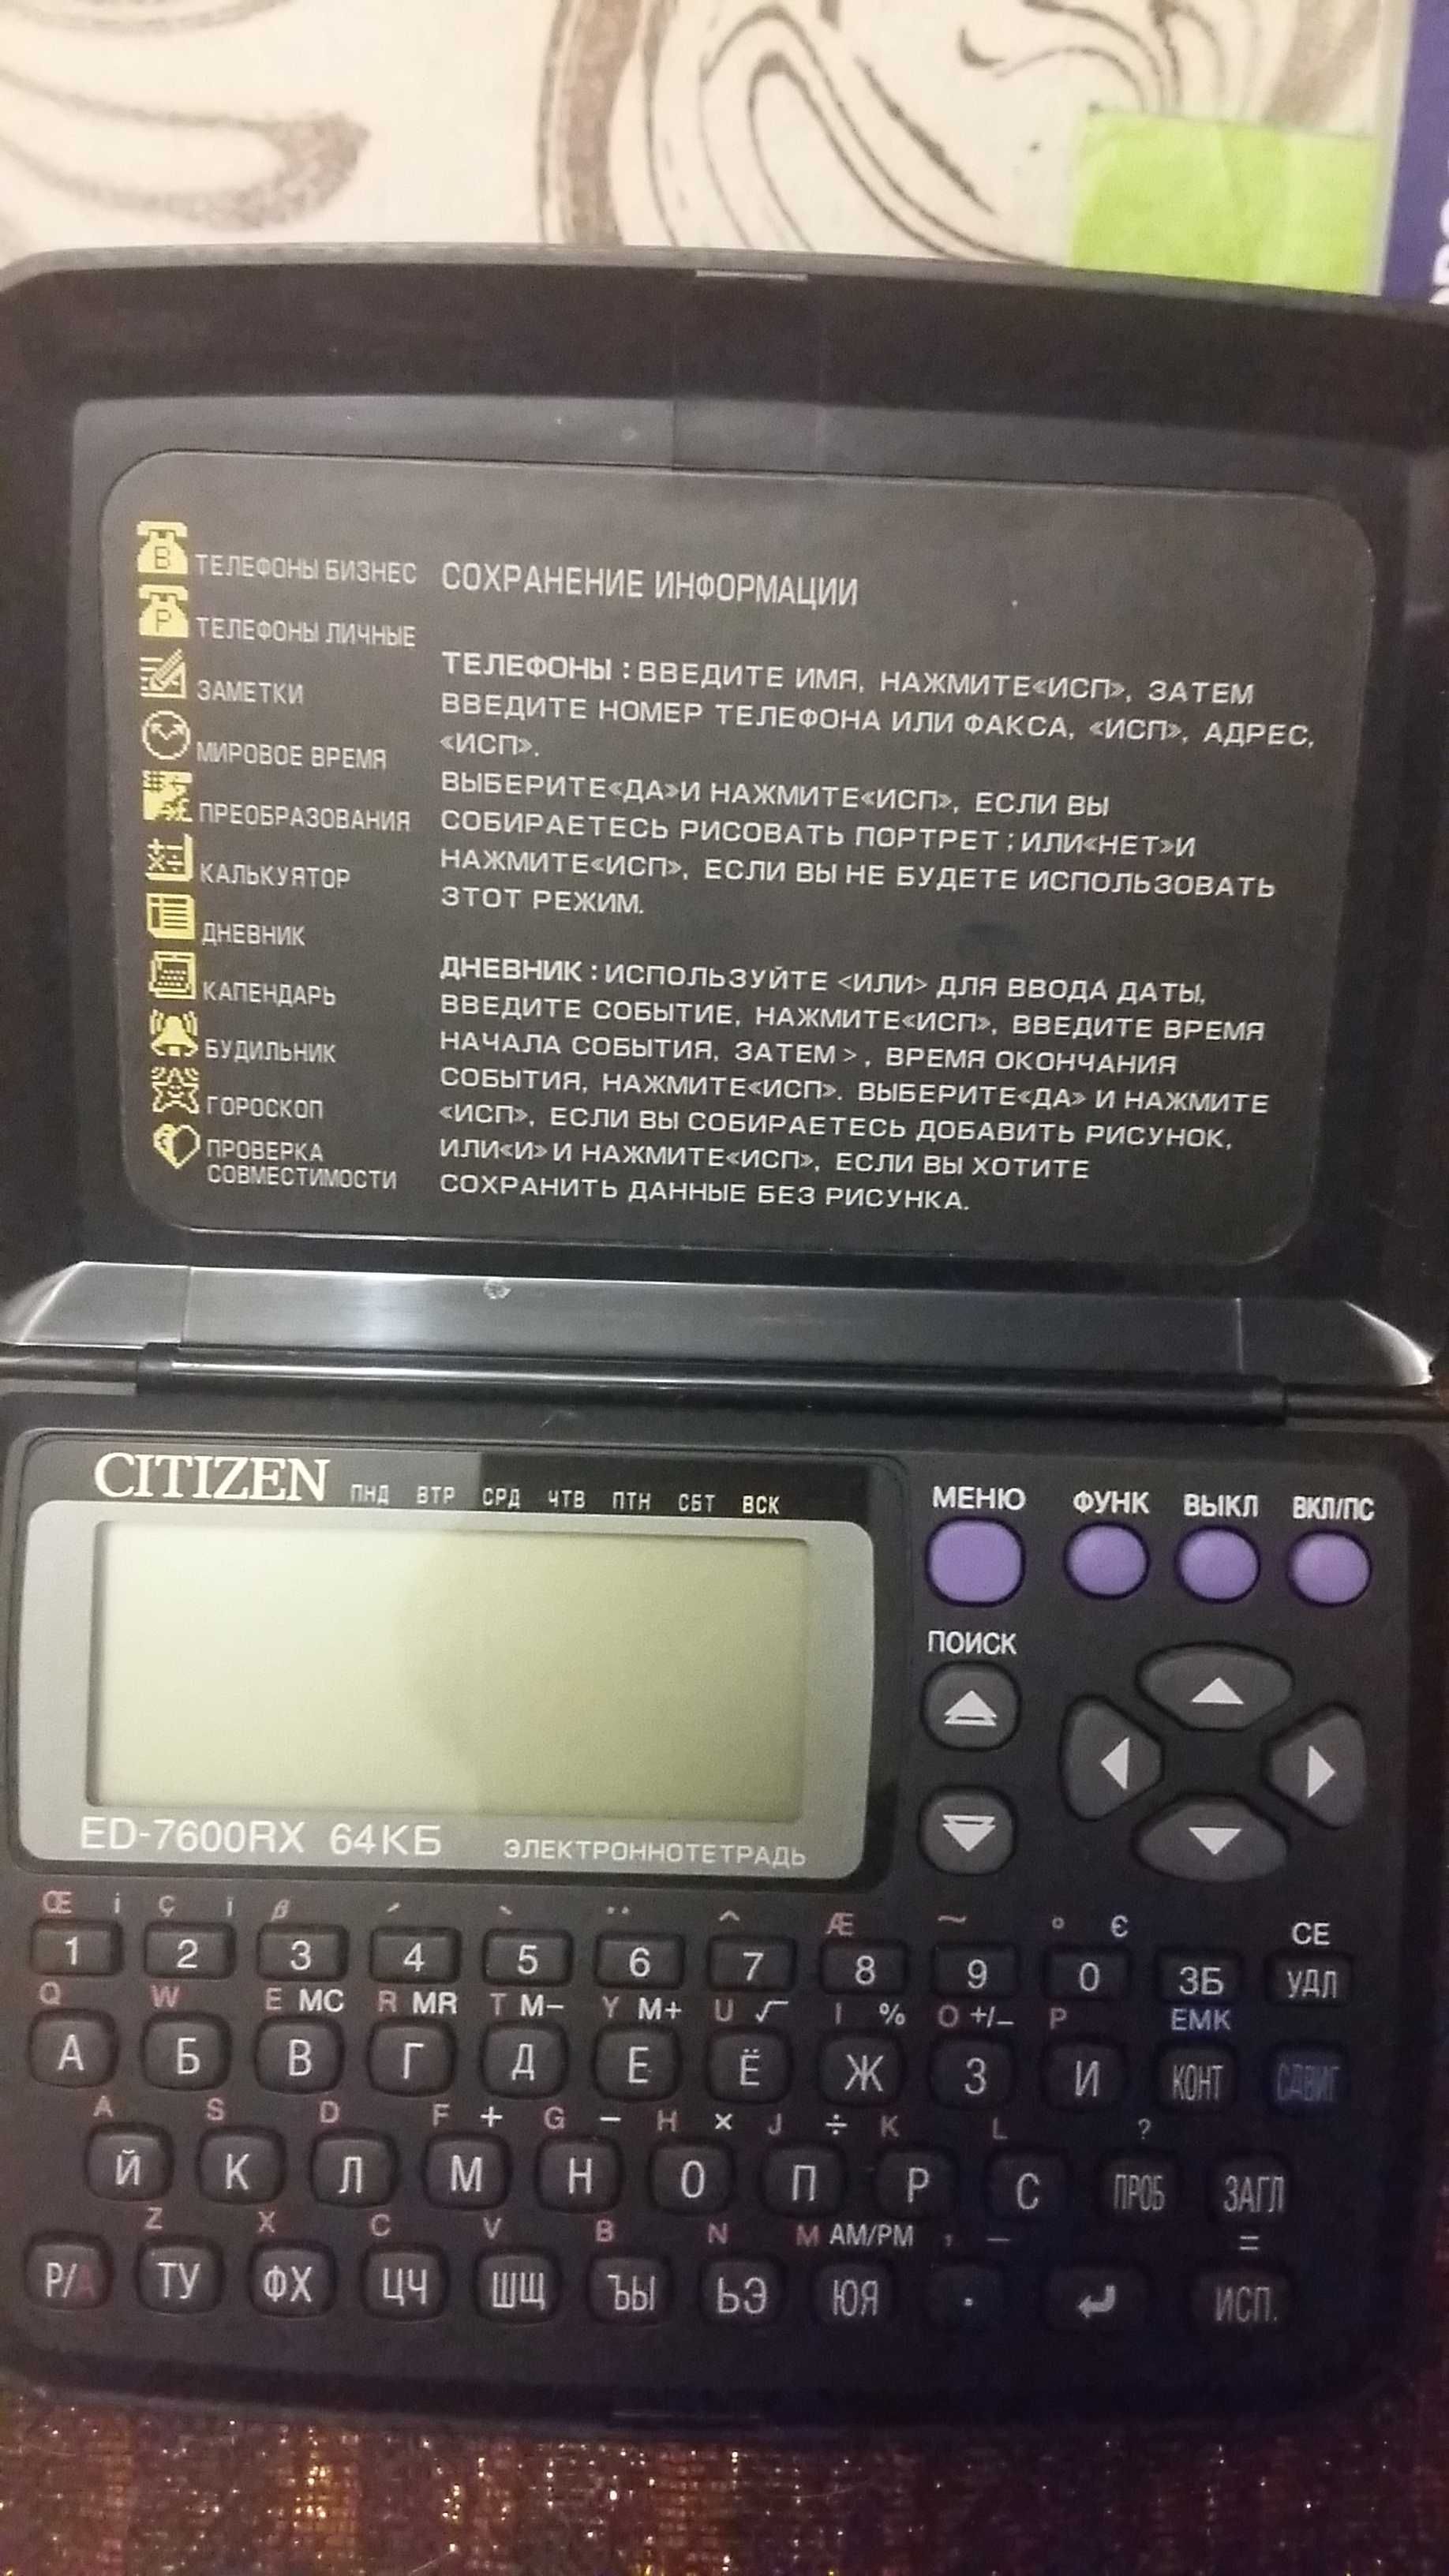 Citizen ED-7600RX, SLD-7720 Citizen, наушник, переходник, адаптер